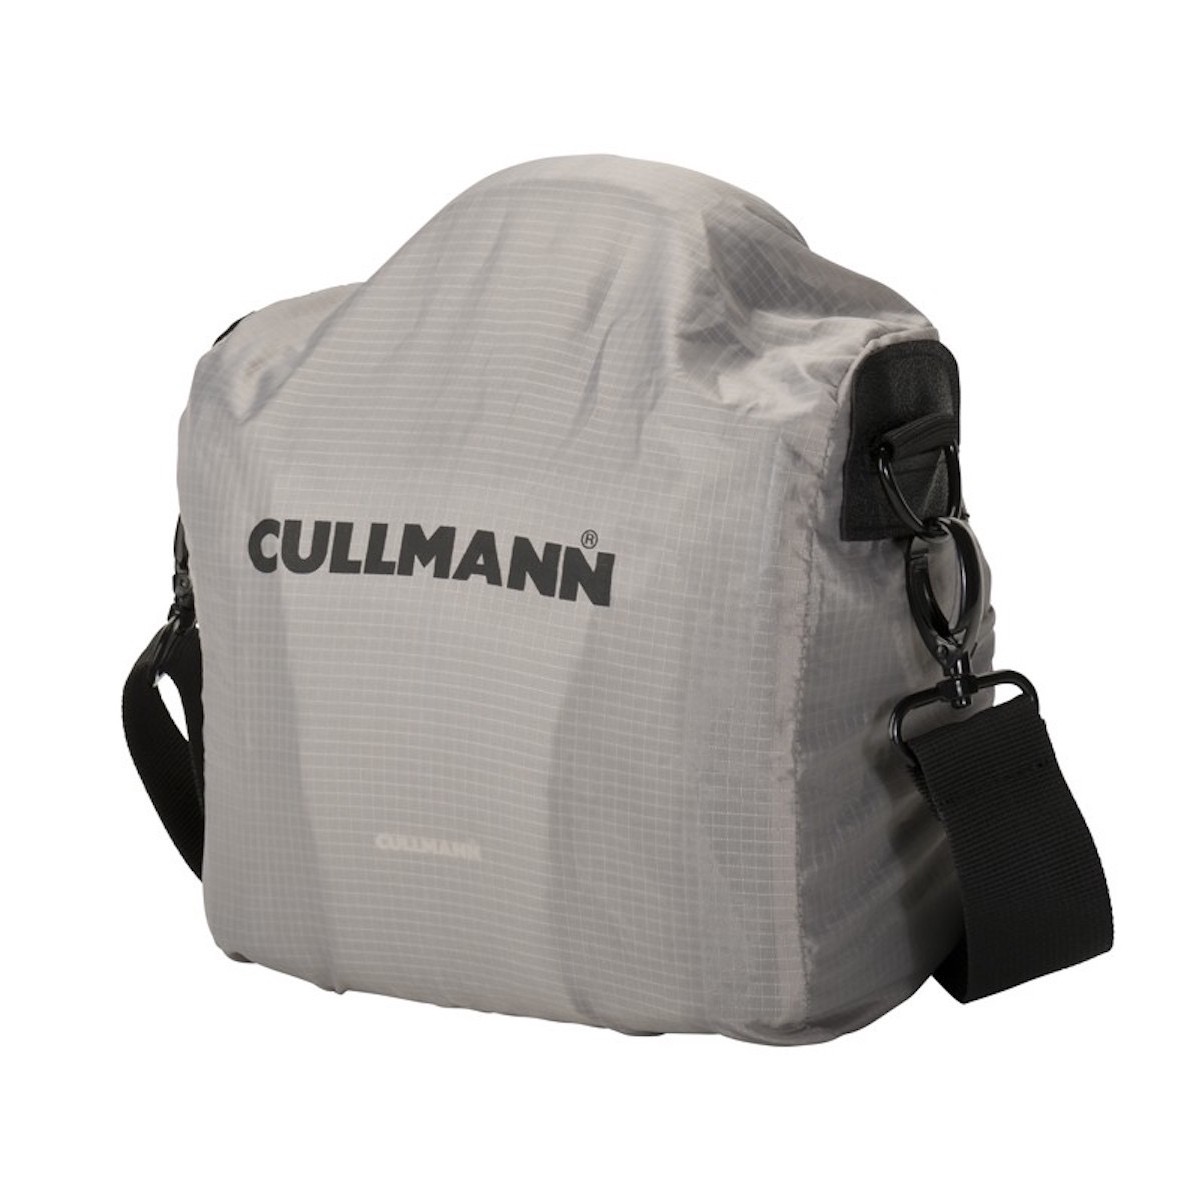 Cullmann Sydney pro Vario 400 Kamera Tasche